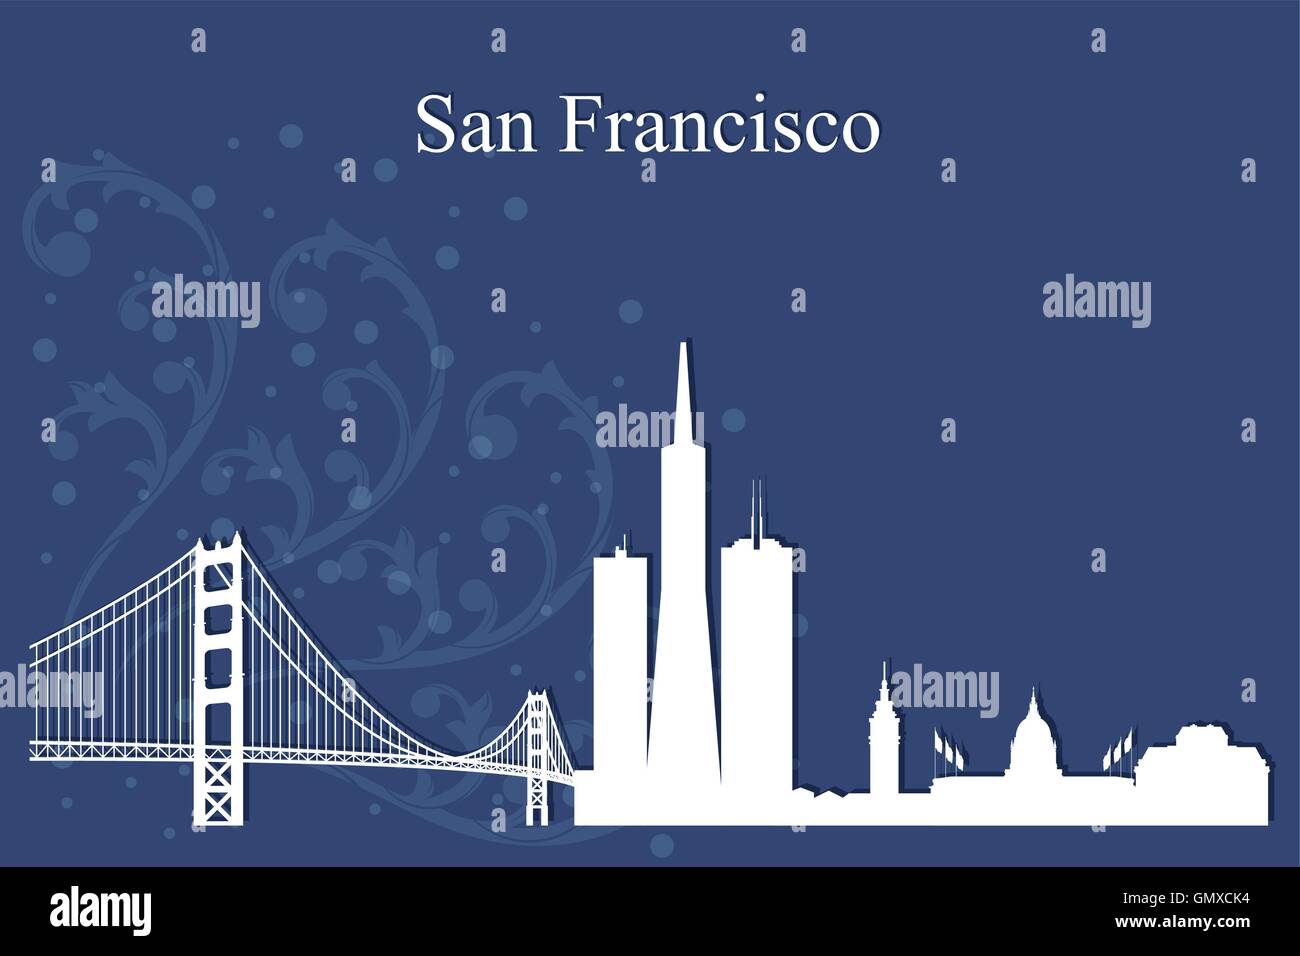 San Francisco city skyline silhouette on blue background Stock Vector